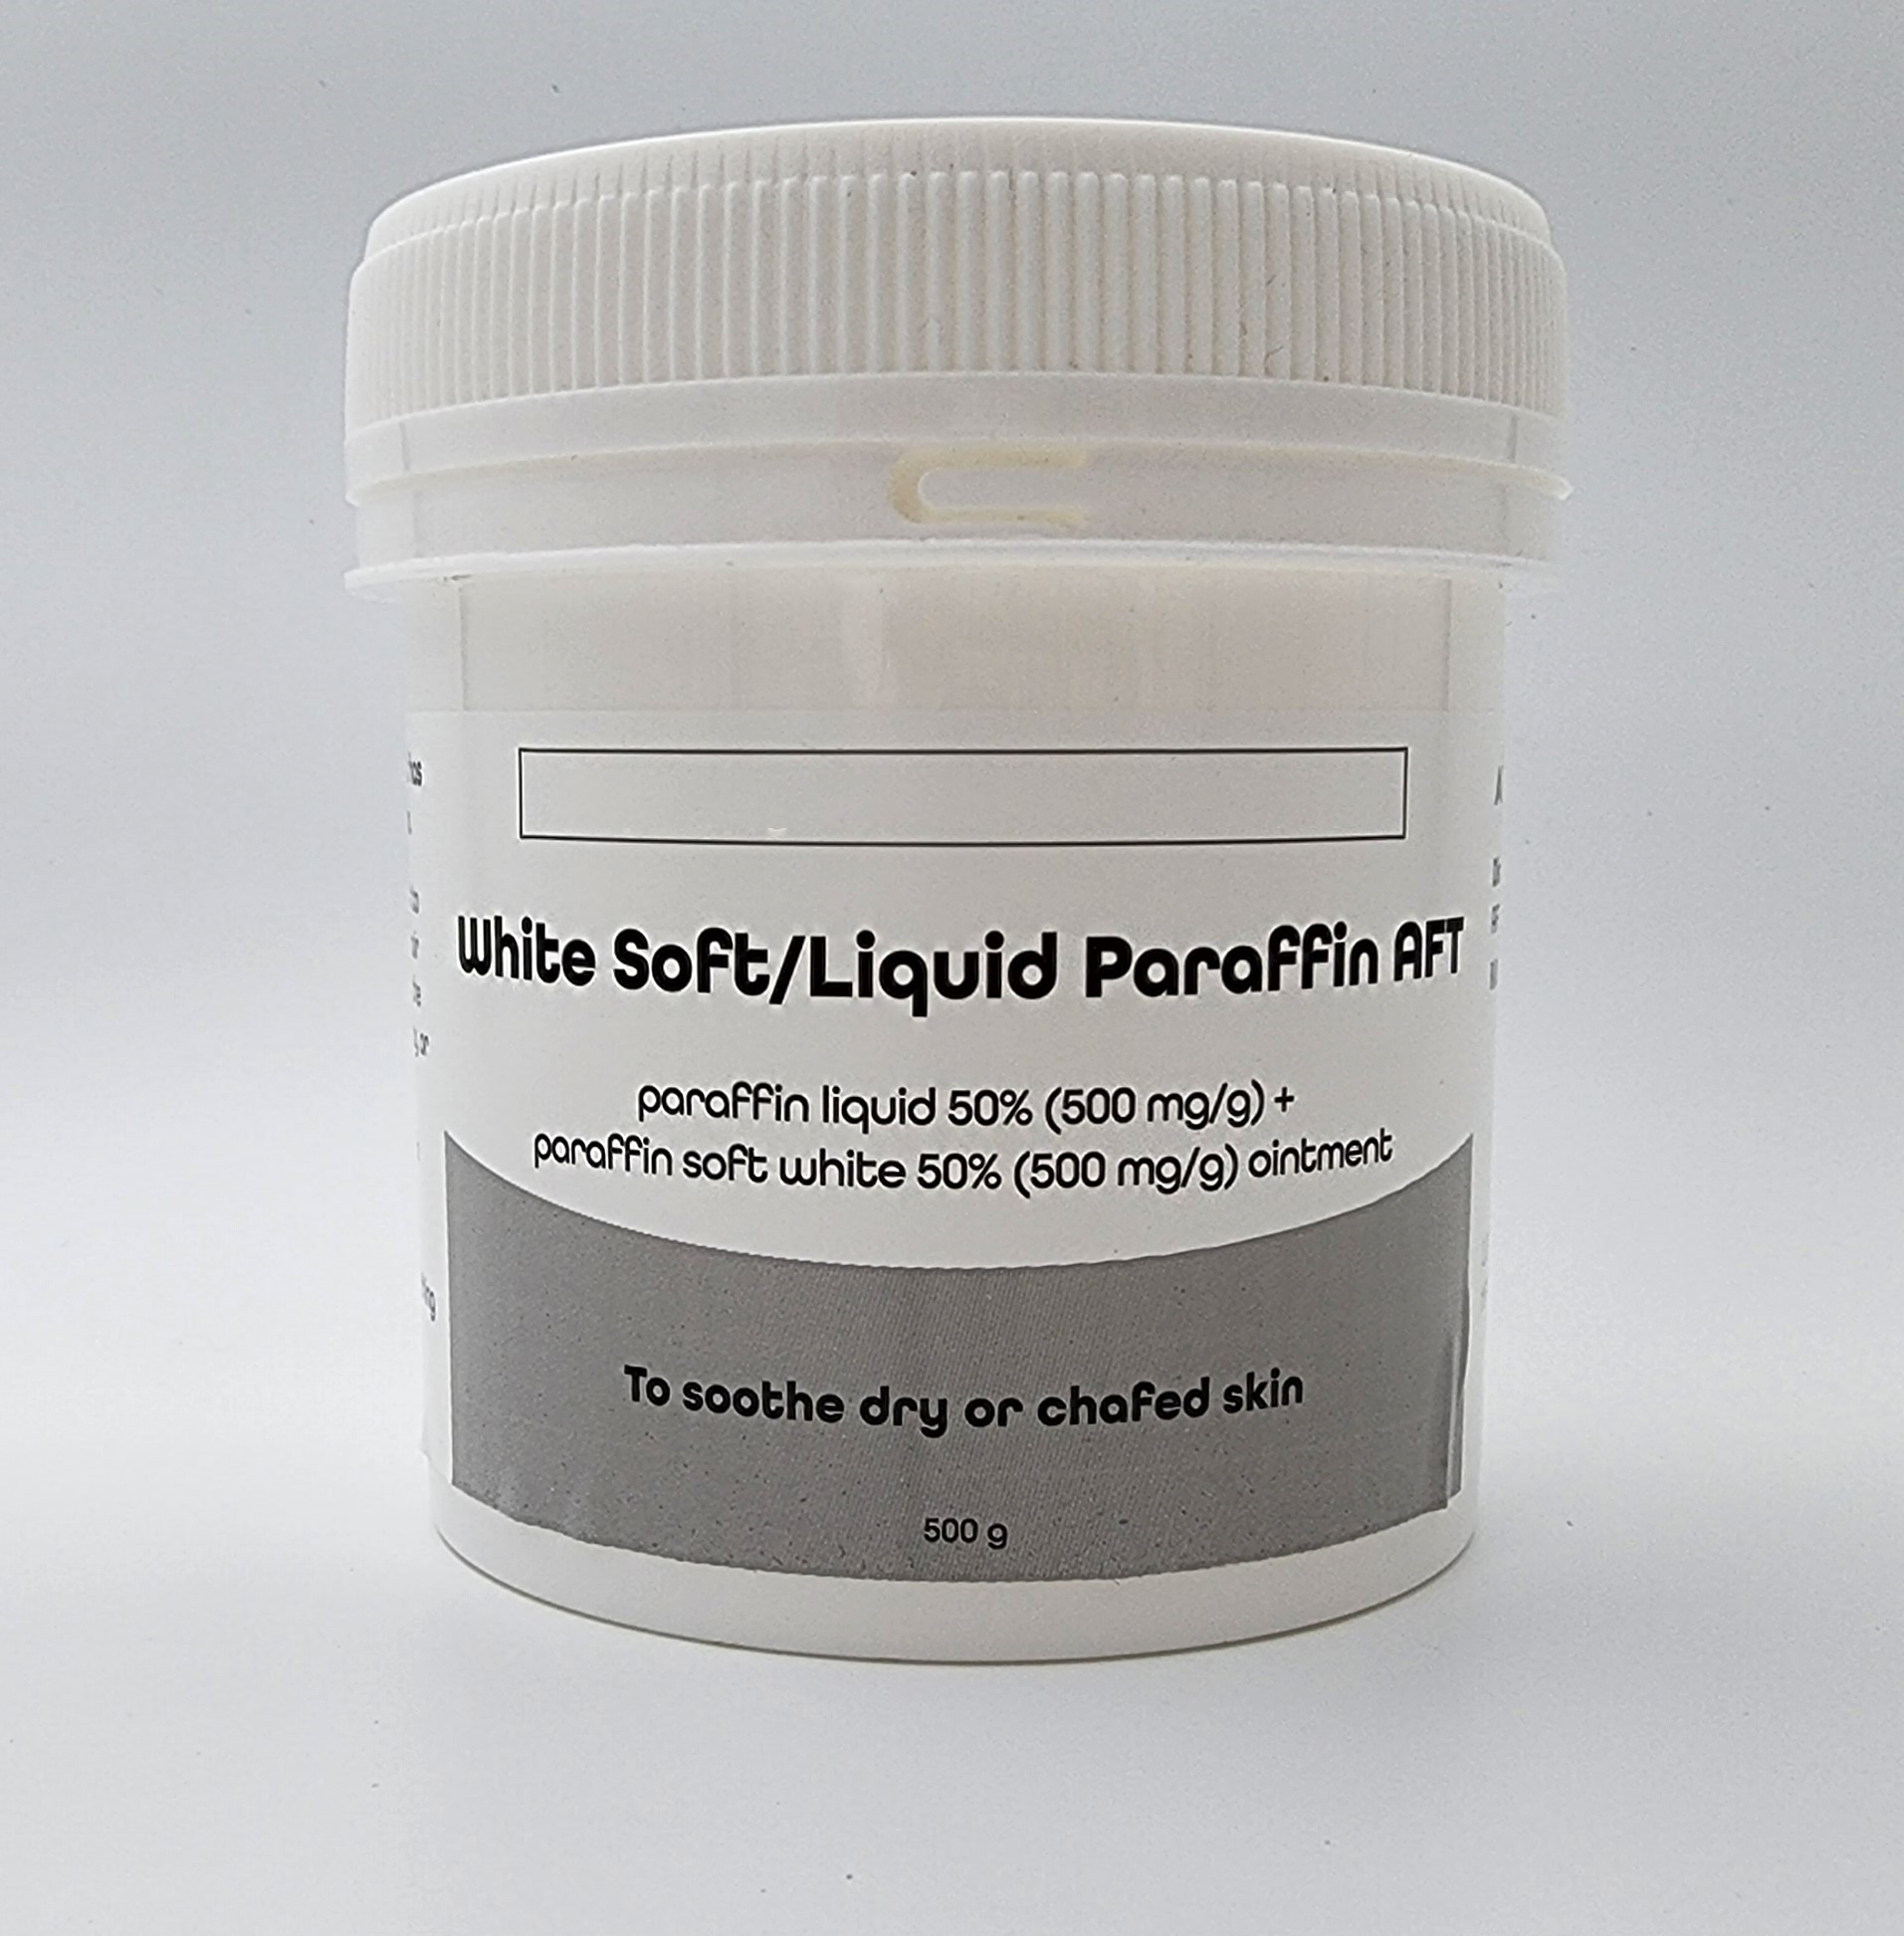 White Soft Liquid Paraffin AFT 500g Tub